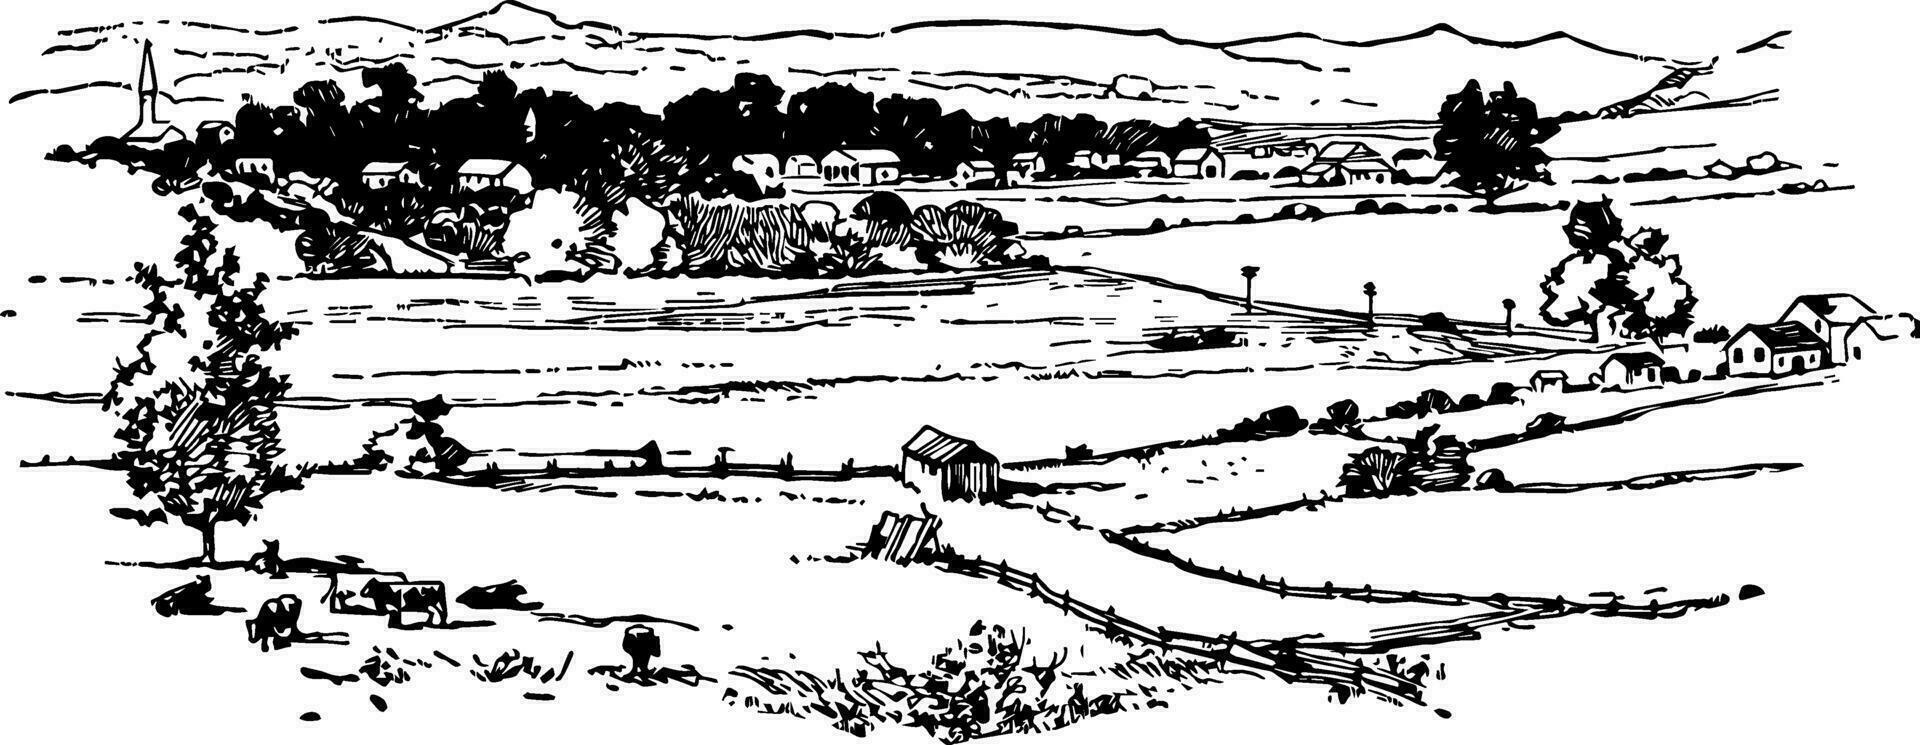 Battlefield of Franklin vintage illustration vector